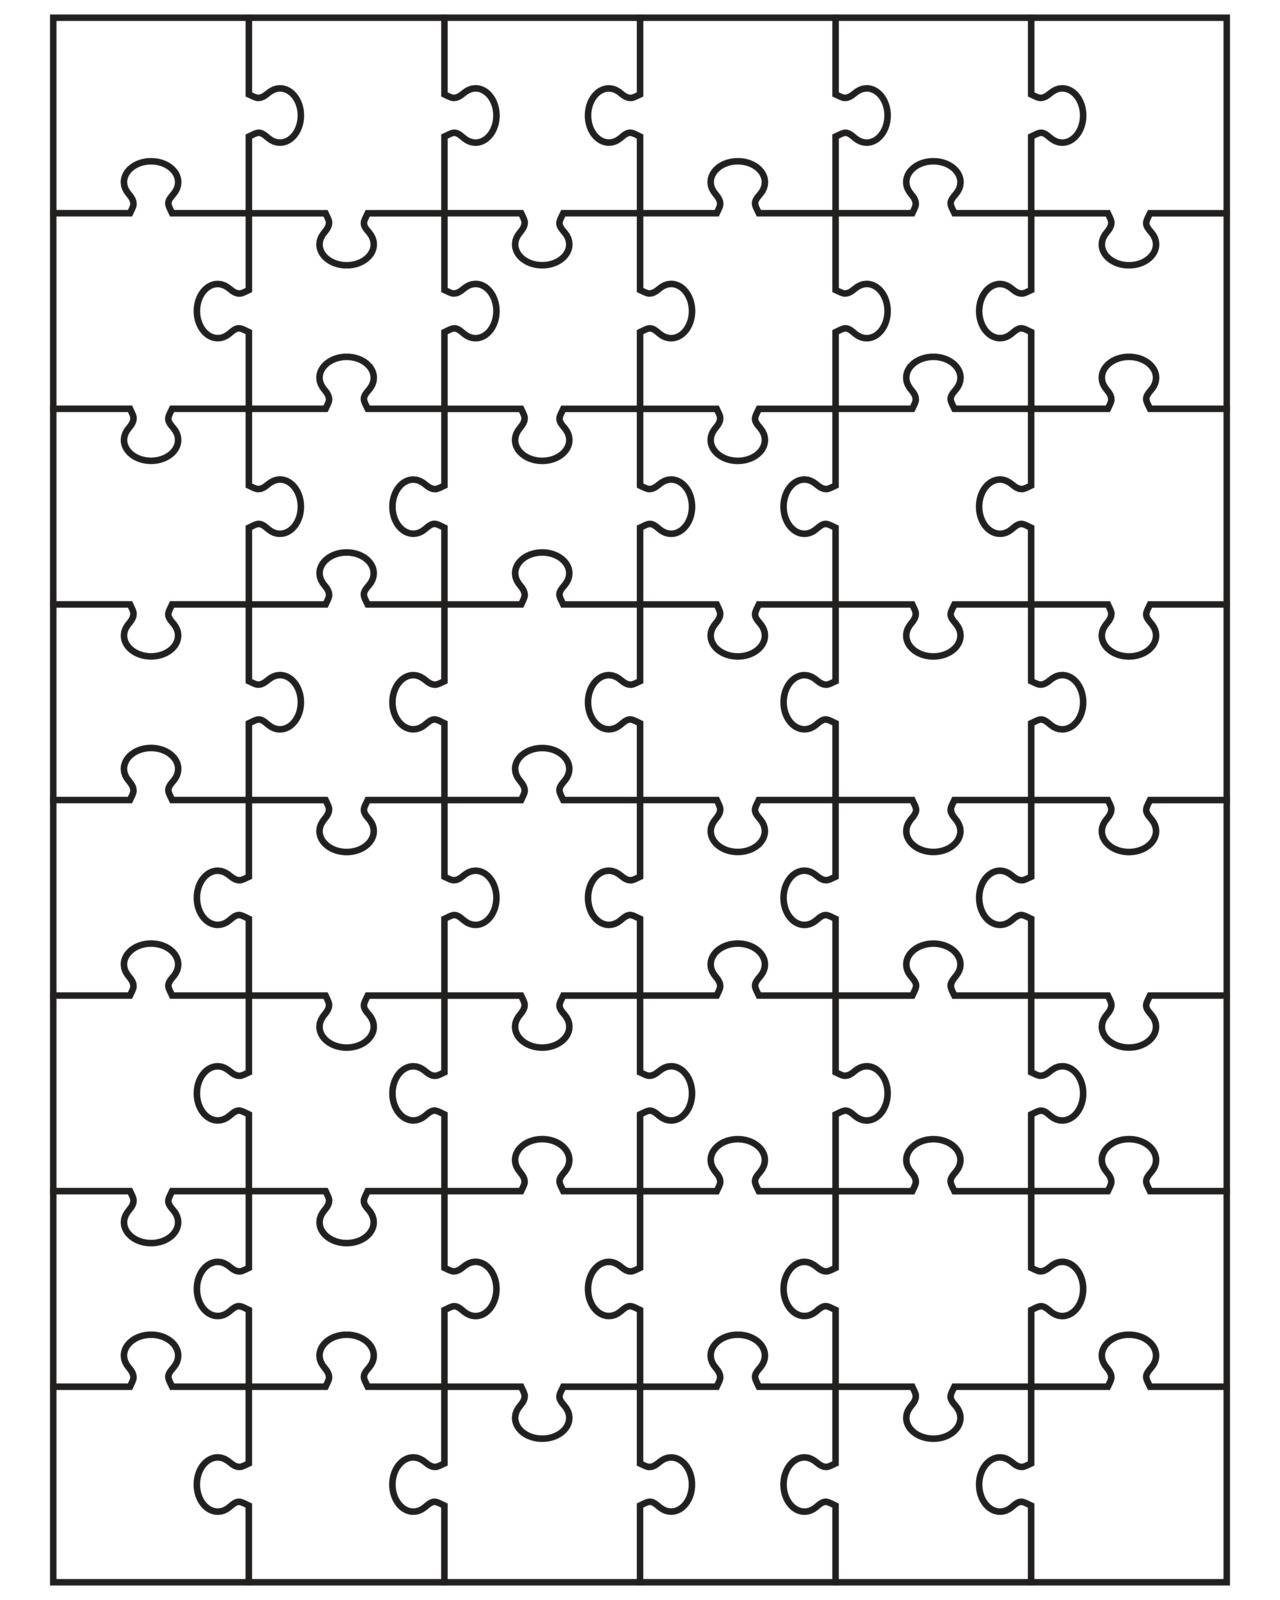 white puzzle by ratkomat